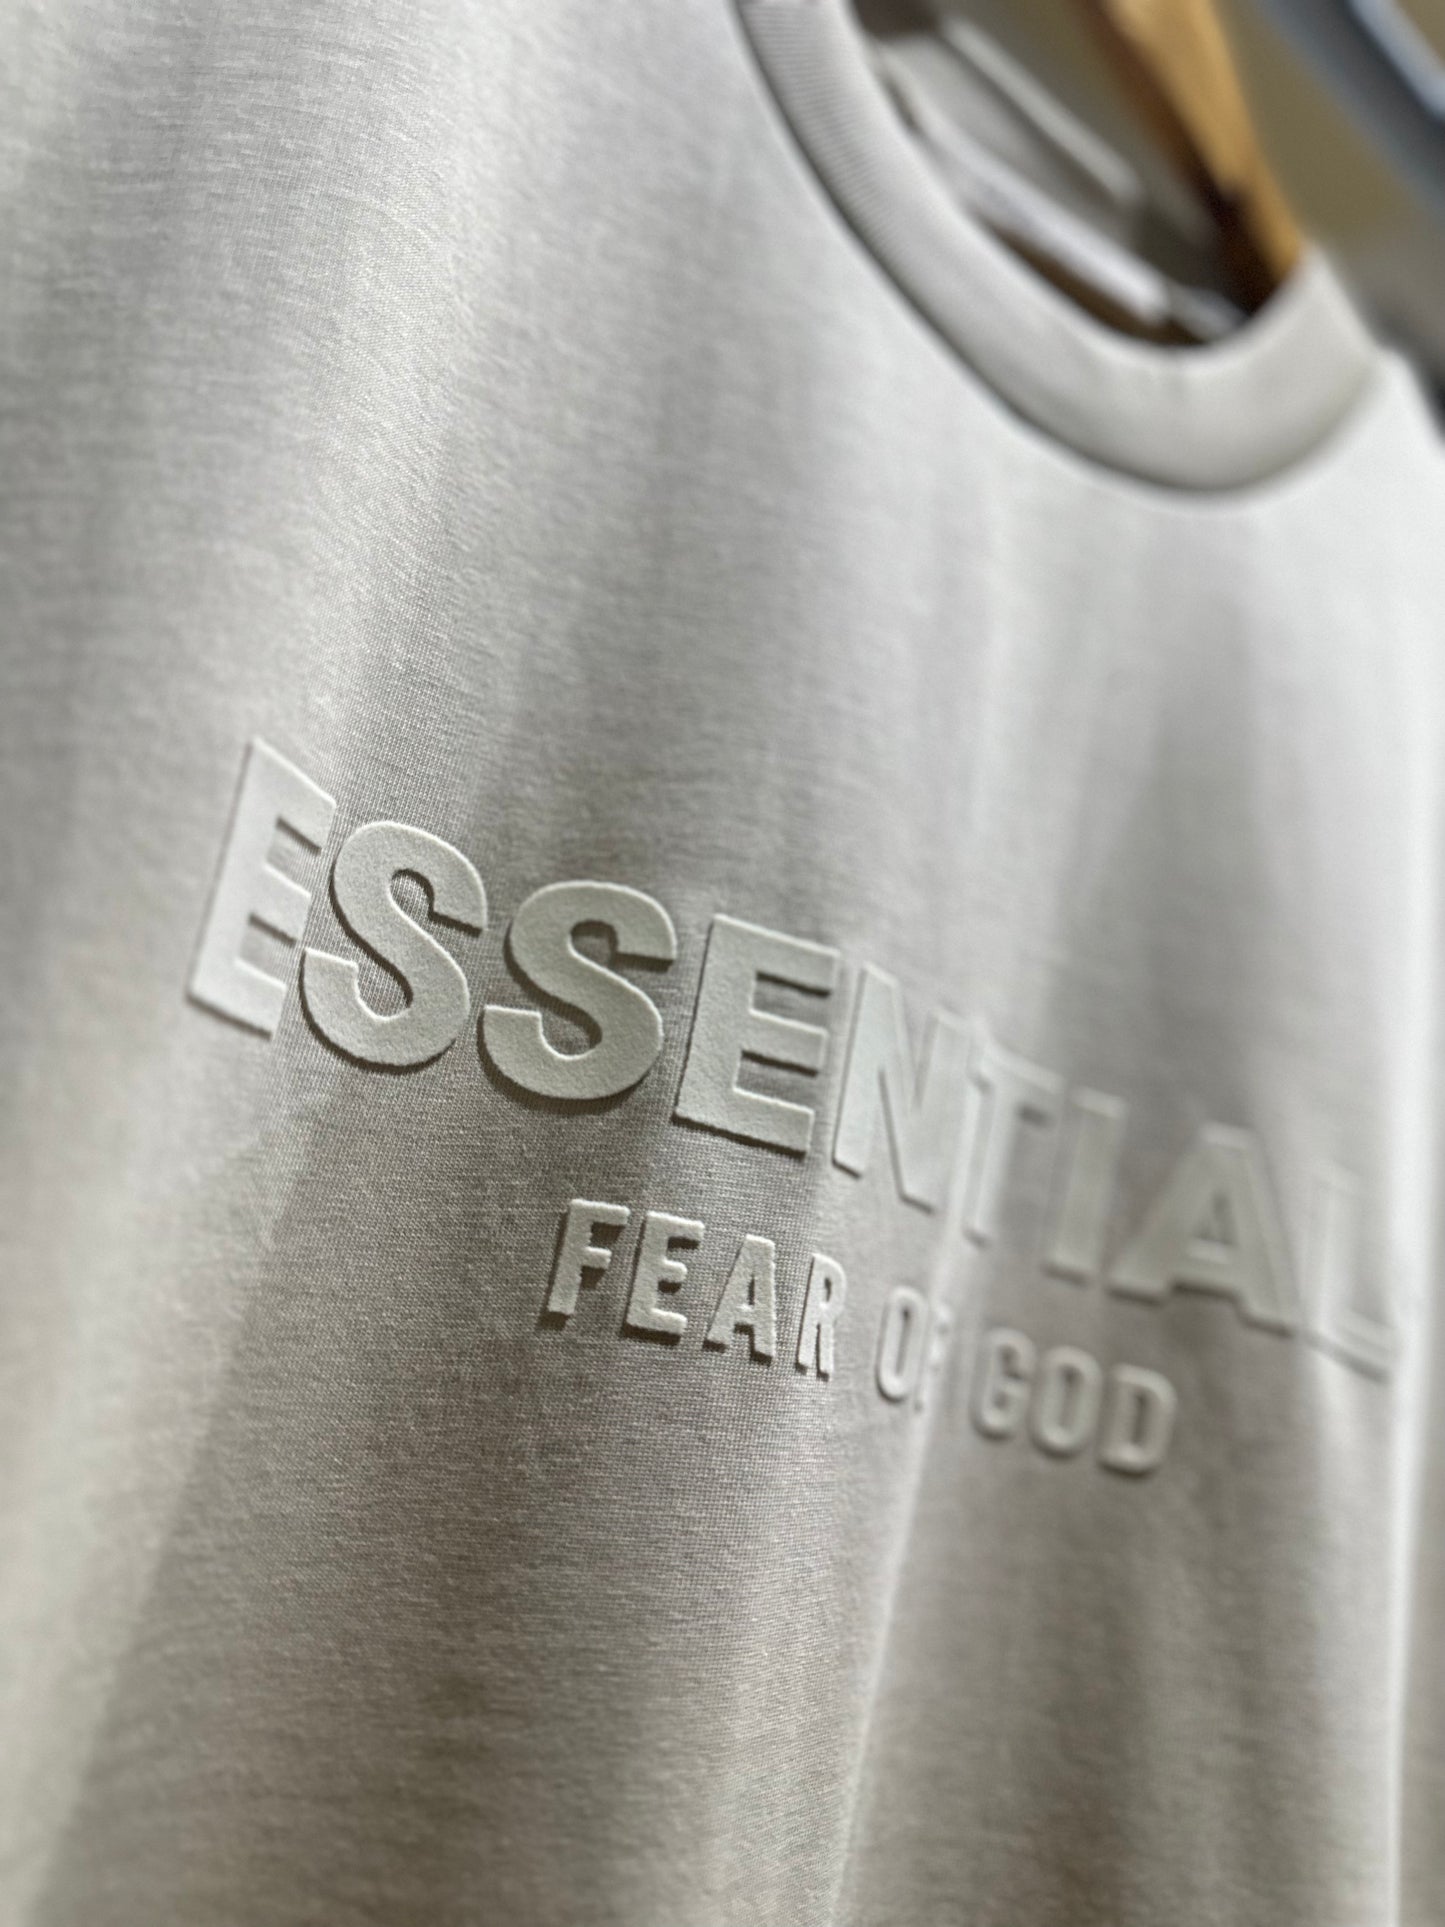 Essentials - Fear of God Tee (Eggshell)